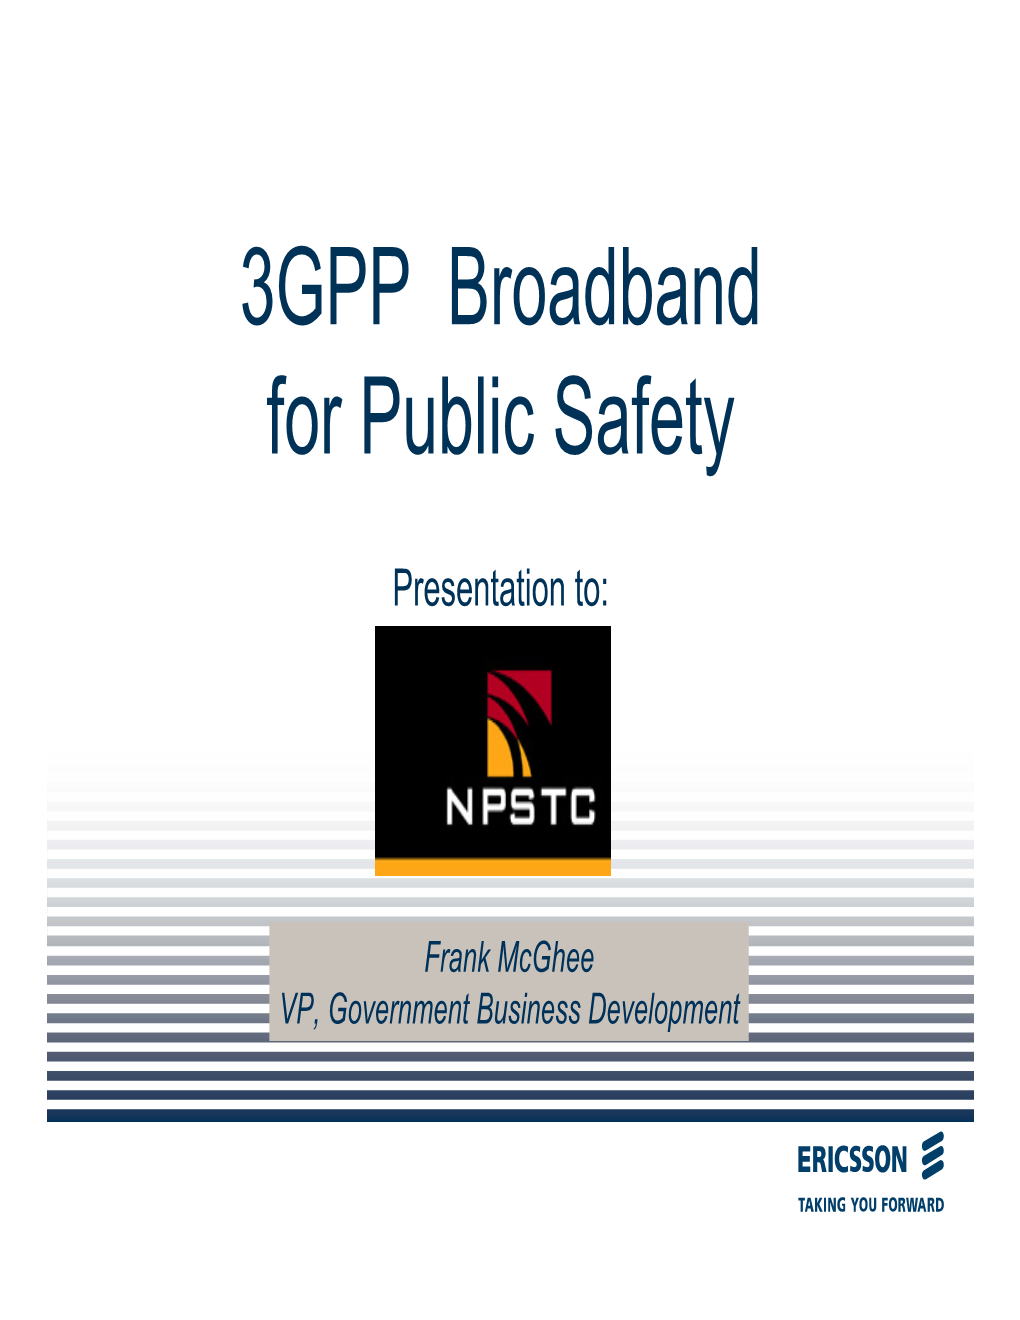 3GPP Broadband for Public Safety